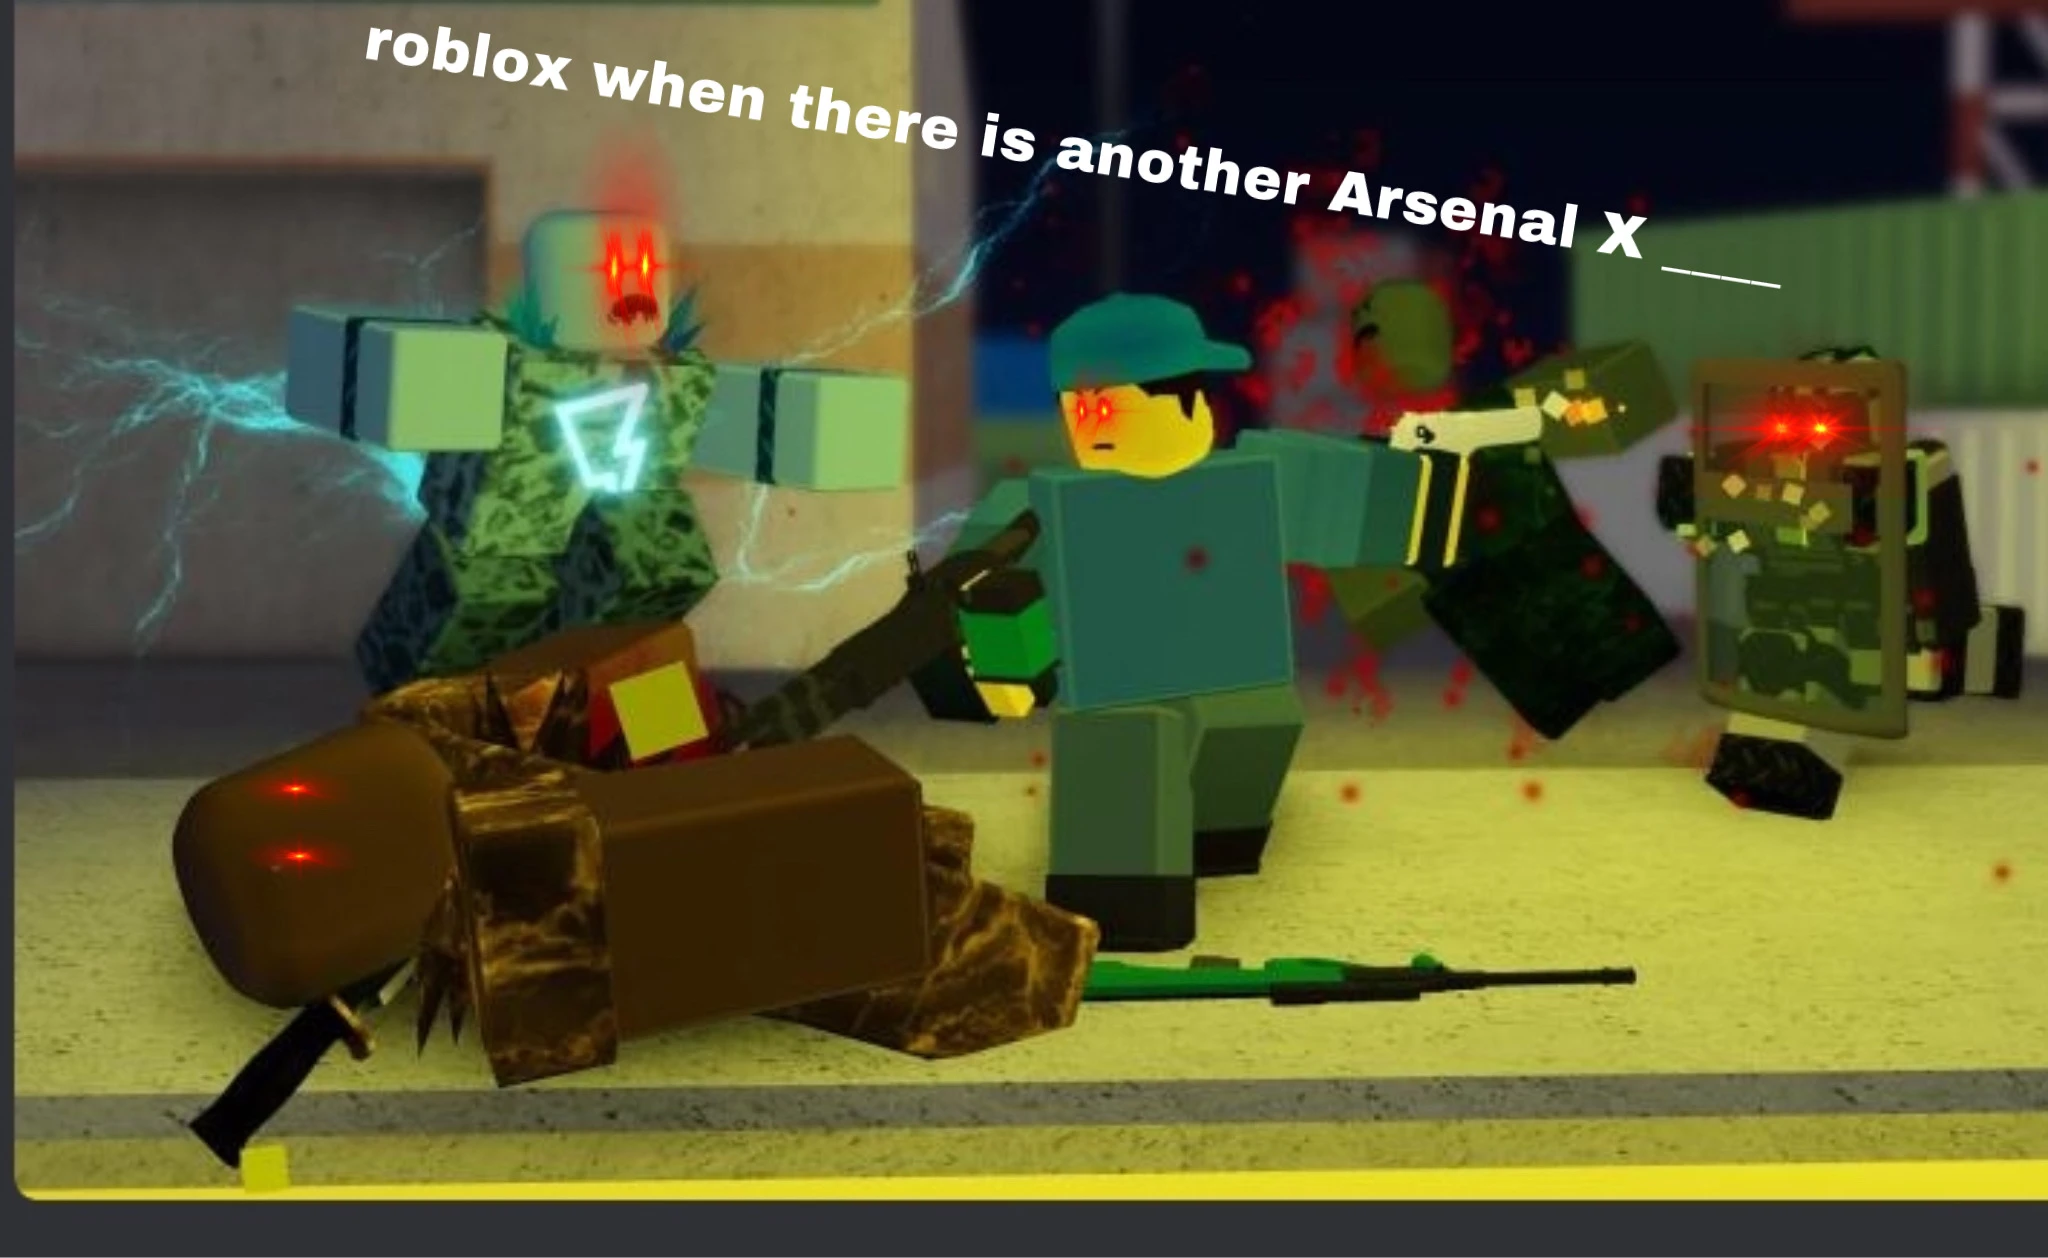 Roblox Arsenal Cursedimages Image By Jean Valencia